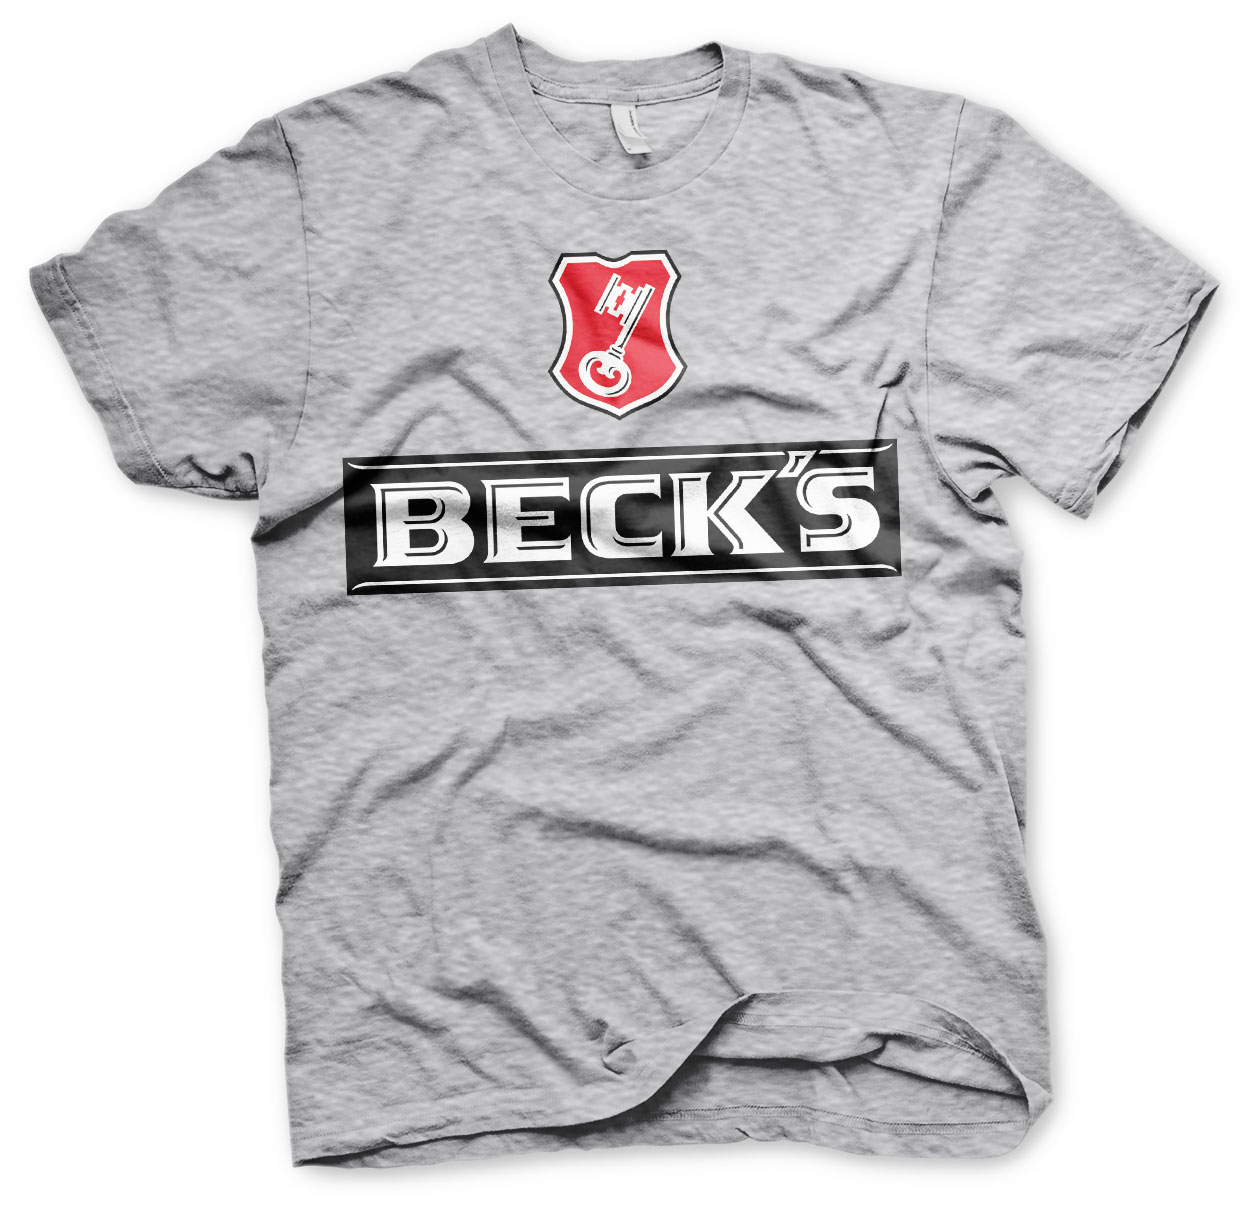 Beck's Beer T-Shirt -